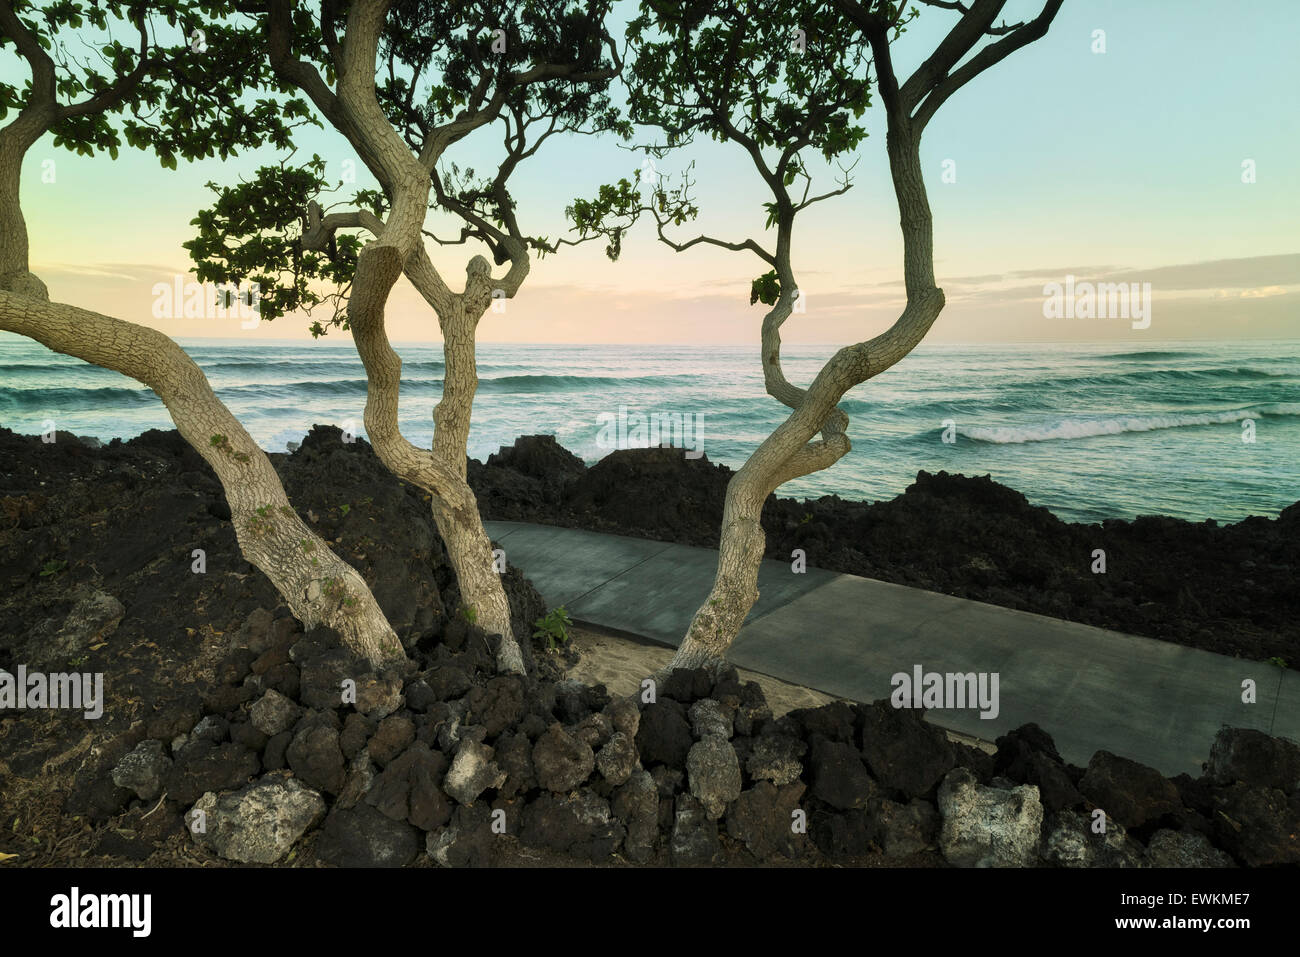 Heliotrope trees with ocean. The Big Island, Hawaii. Stock Photo